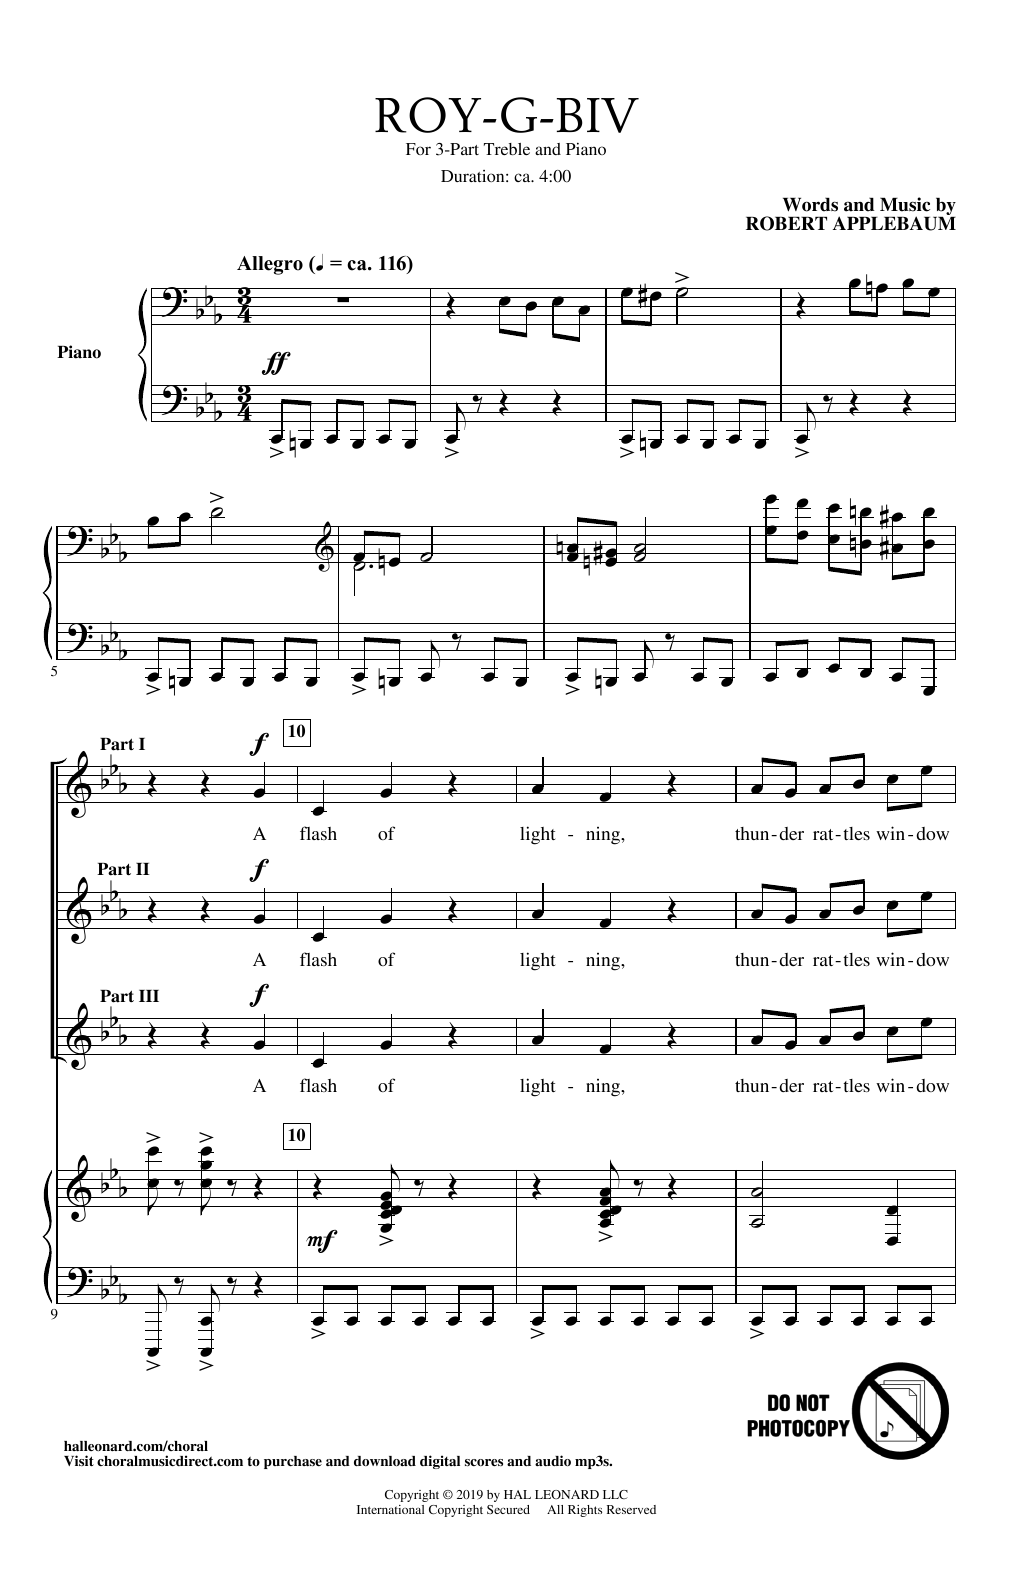 Robert Applebaum ROY-G-BIV Sheet Music Notes & Chords for 3-Part Treble Choir - Download or Print PDF